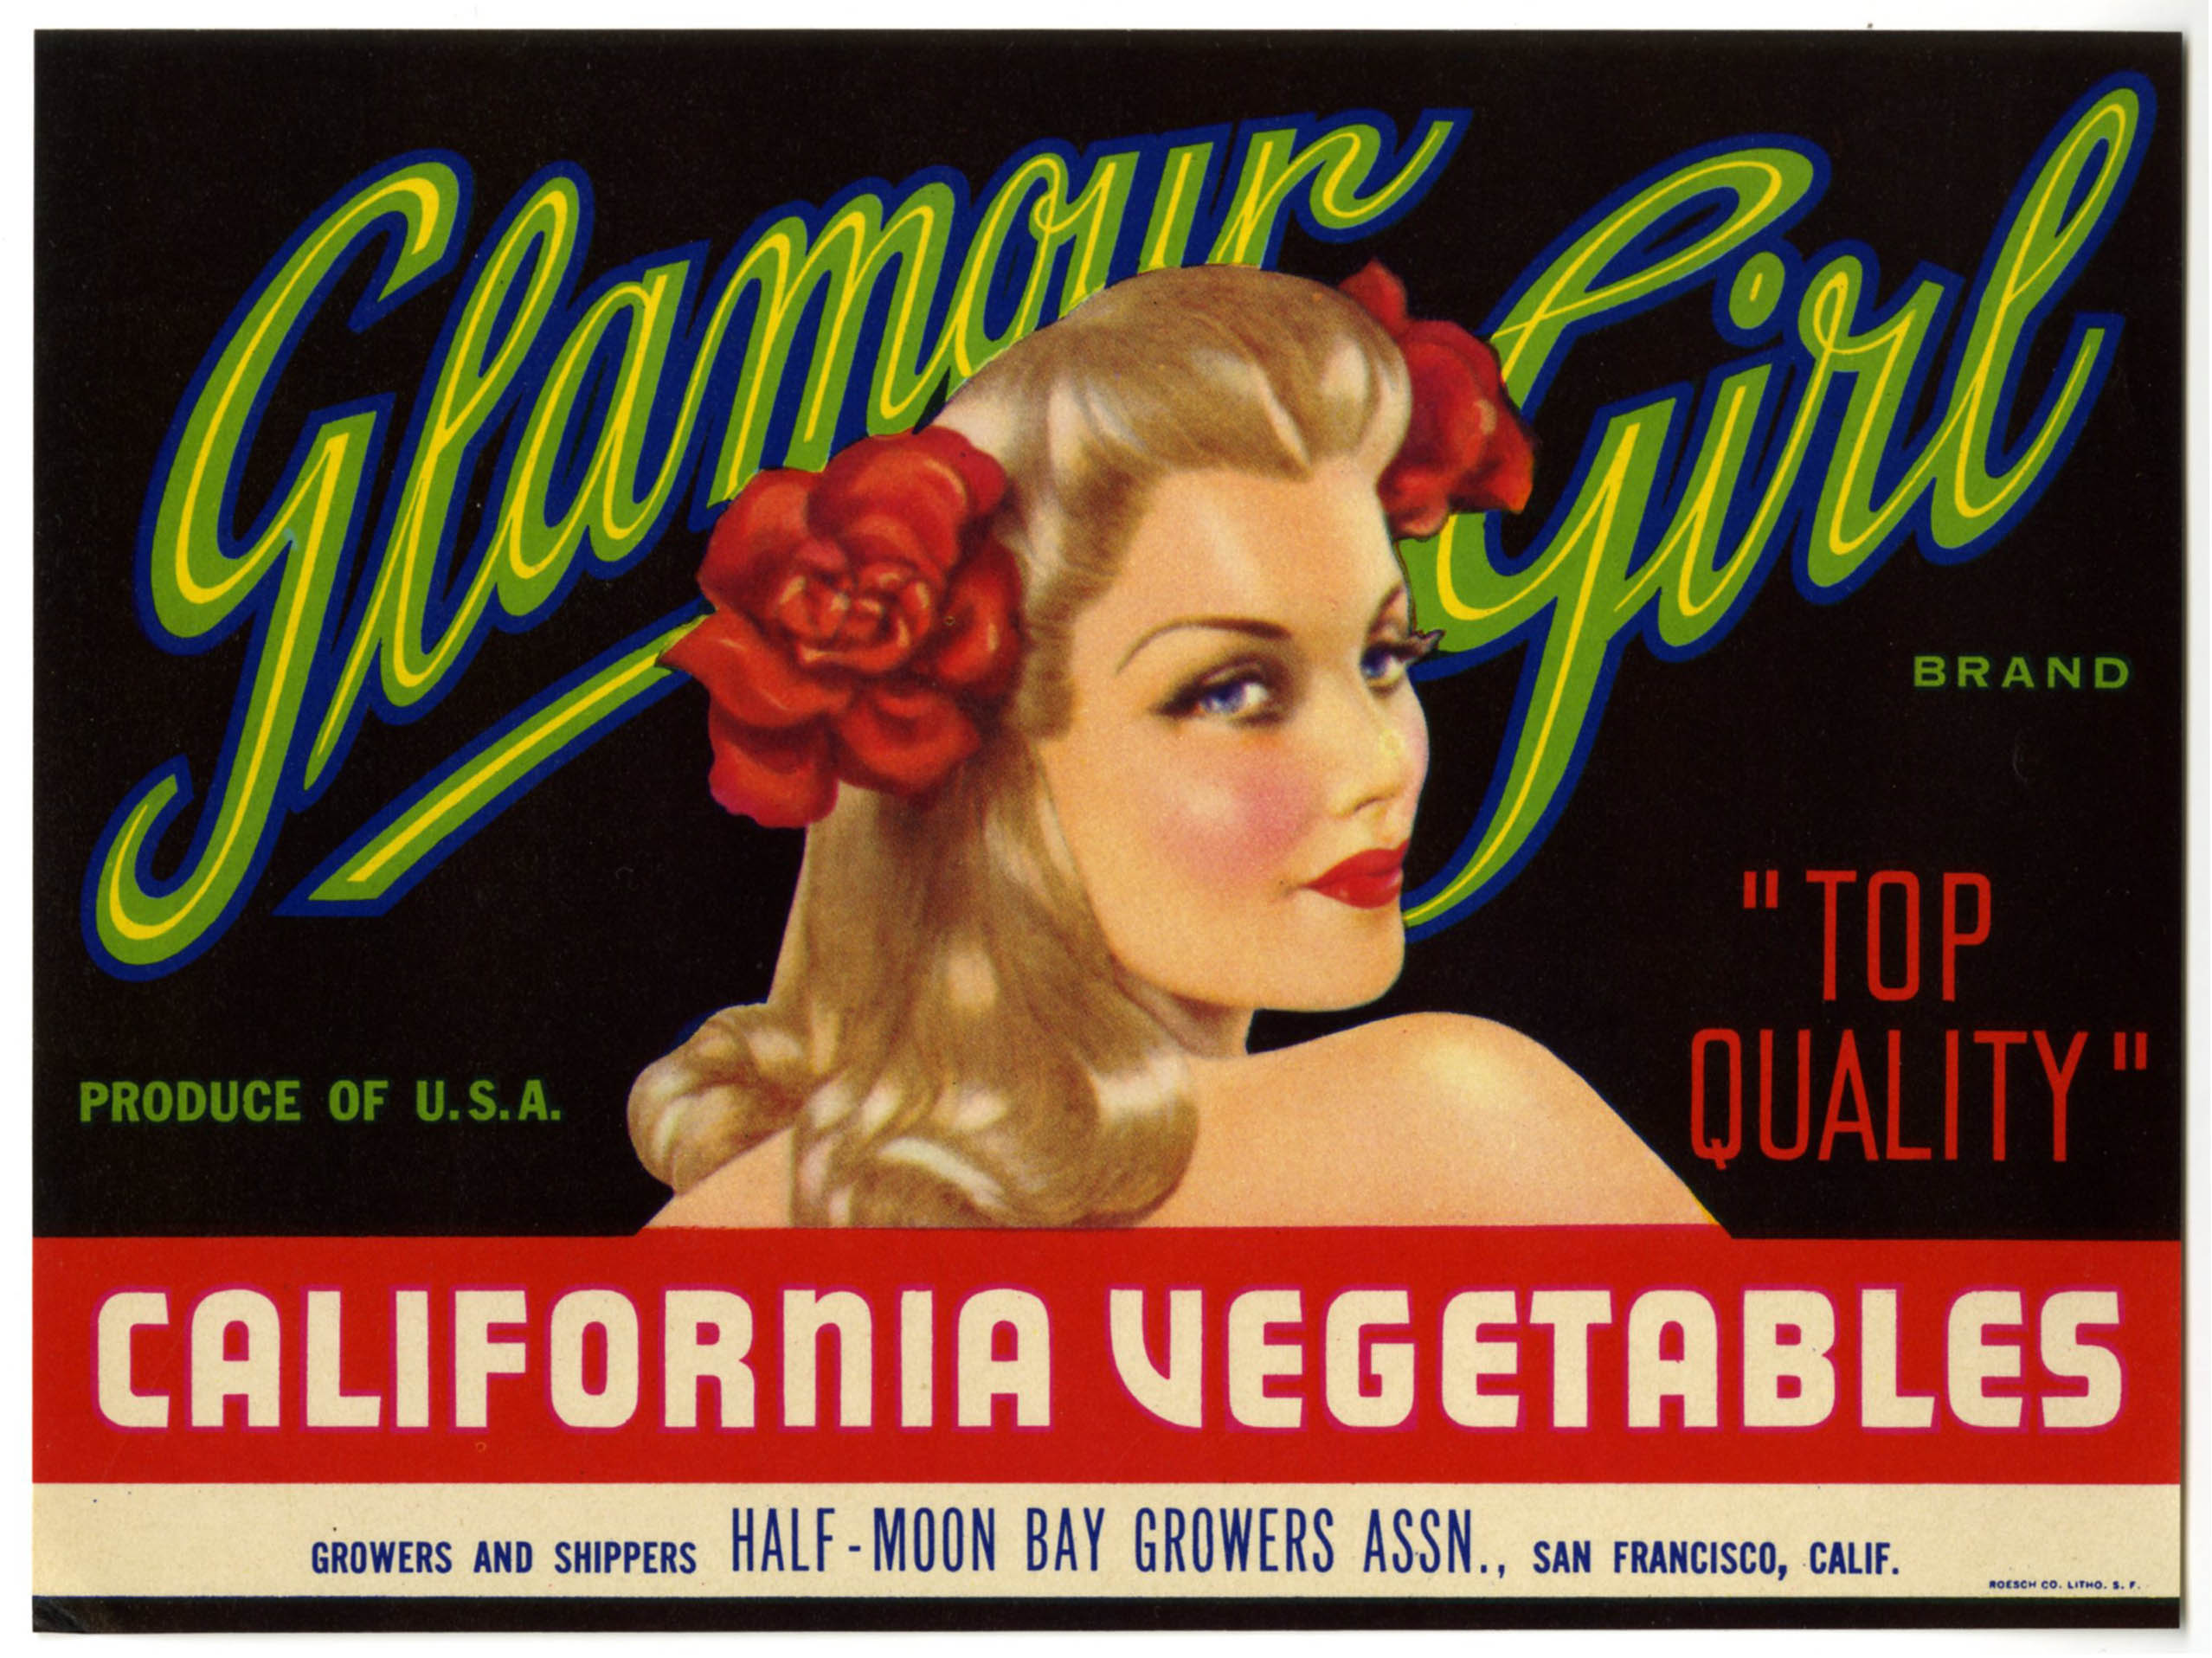 Glamour Girl Brand - Half-Moon Bay Growers Association - San Francisco, California U.S.A. - date unknown